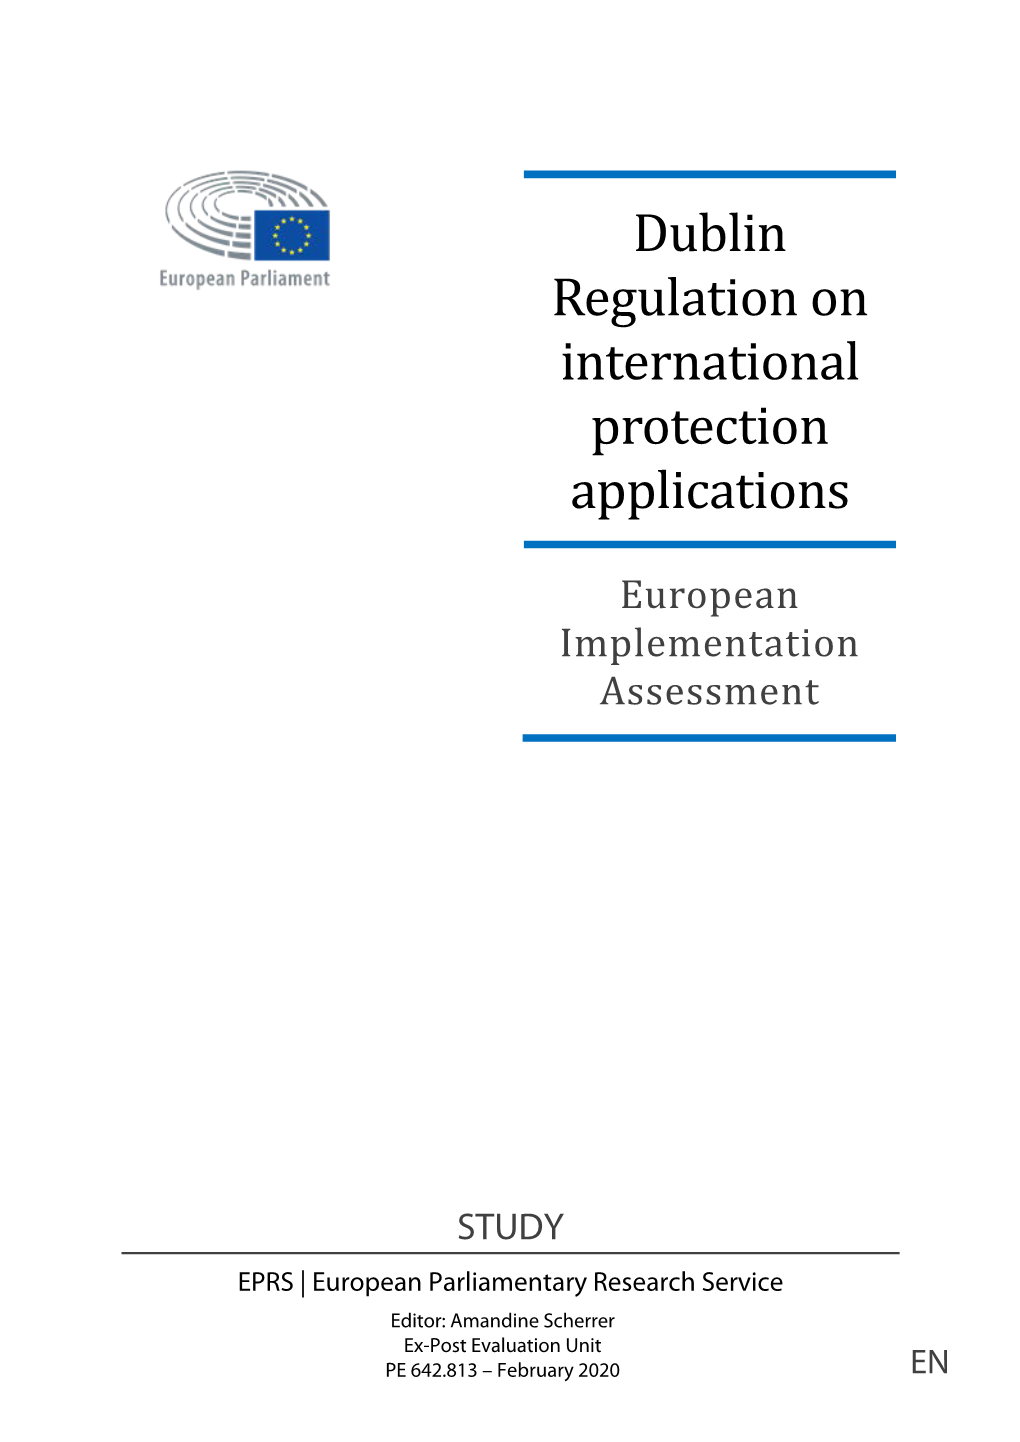 Dublin Regulation on International Protection Applications